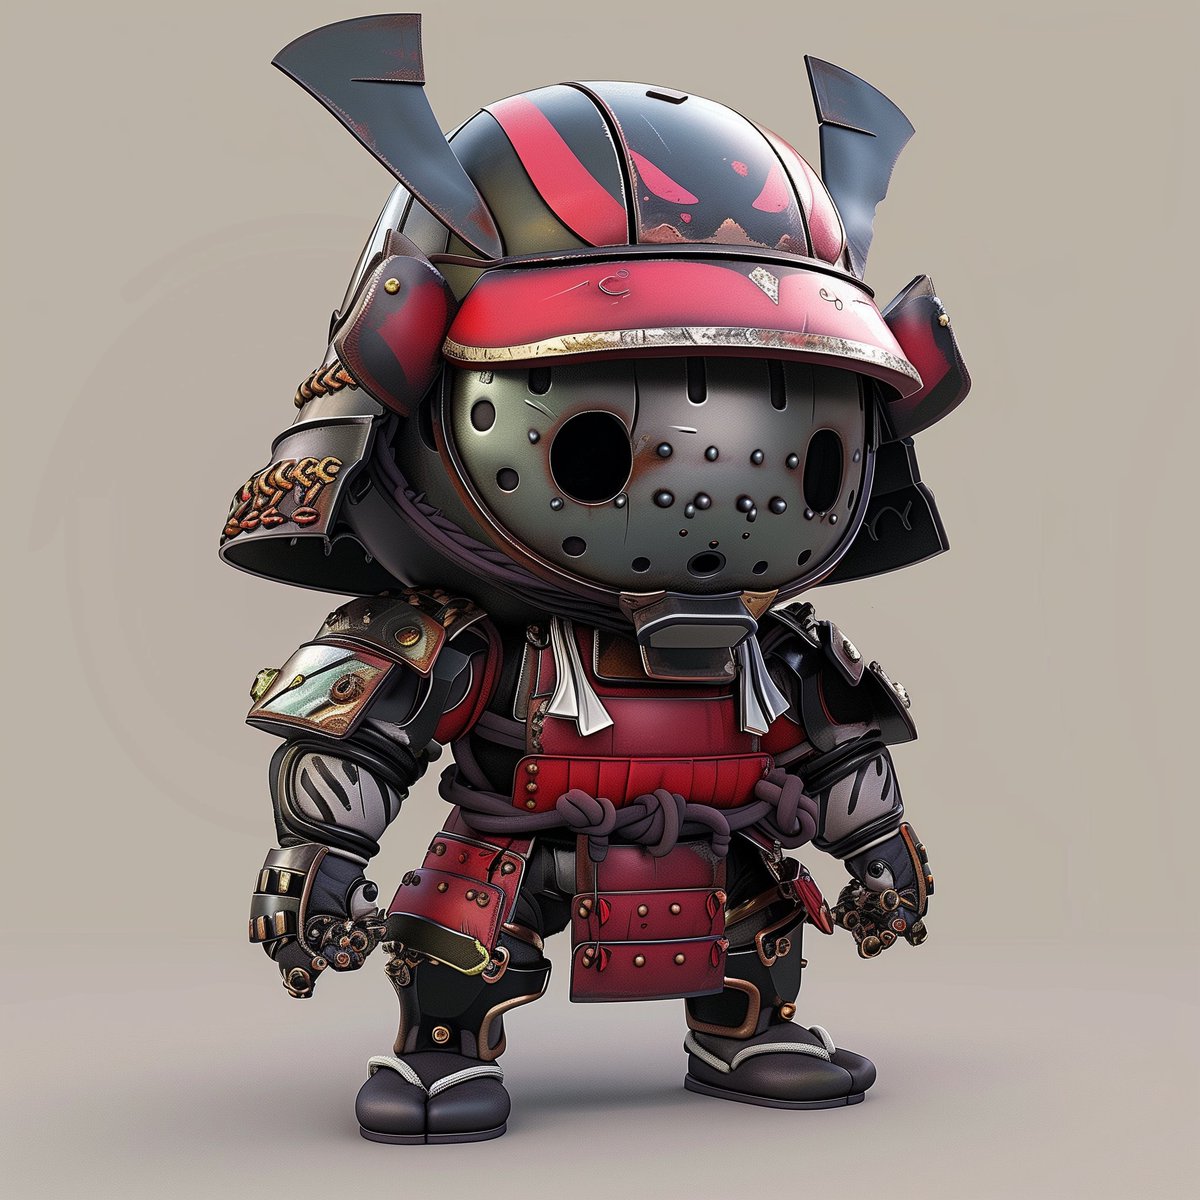 Samurai variations!  

#cute #cuterobots #robots #mecha #game #gamedesign #robotgame #robotlovers #ai #aiart #nft #nftart #nftcommunity #Metaverse #robotic #adorable #kawaii #chibi #chibistyle #japan #japanese #japanculture #anime #samurai #edo #samuraiarmor #japantoy